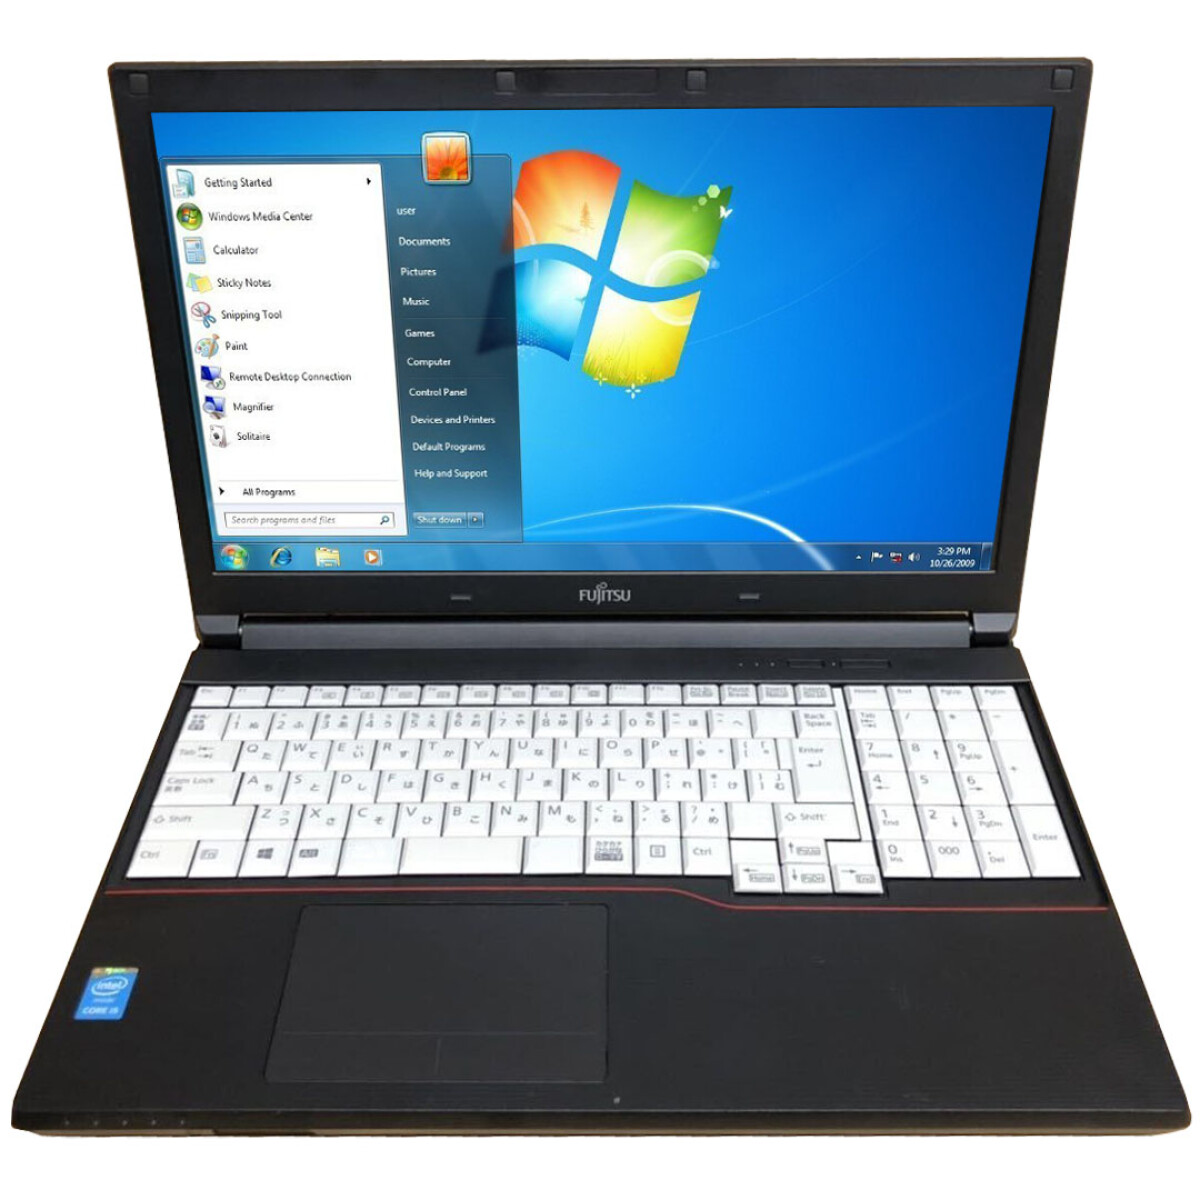 Notebook Fujitsu Core I5 2.0GHZ, 4GB, 320GB, 15.6", Coa WIN7 Pro, Español - 001 